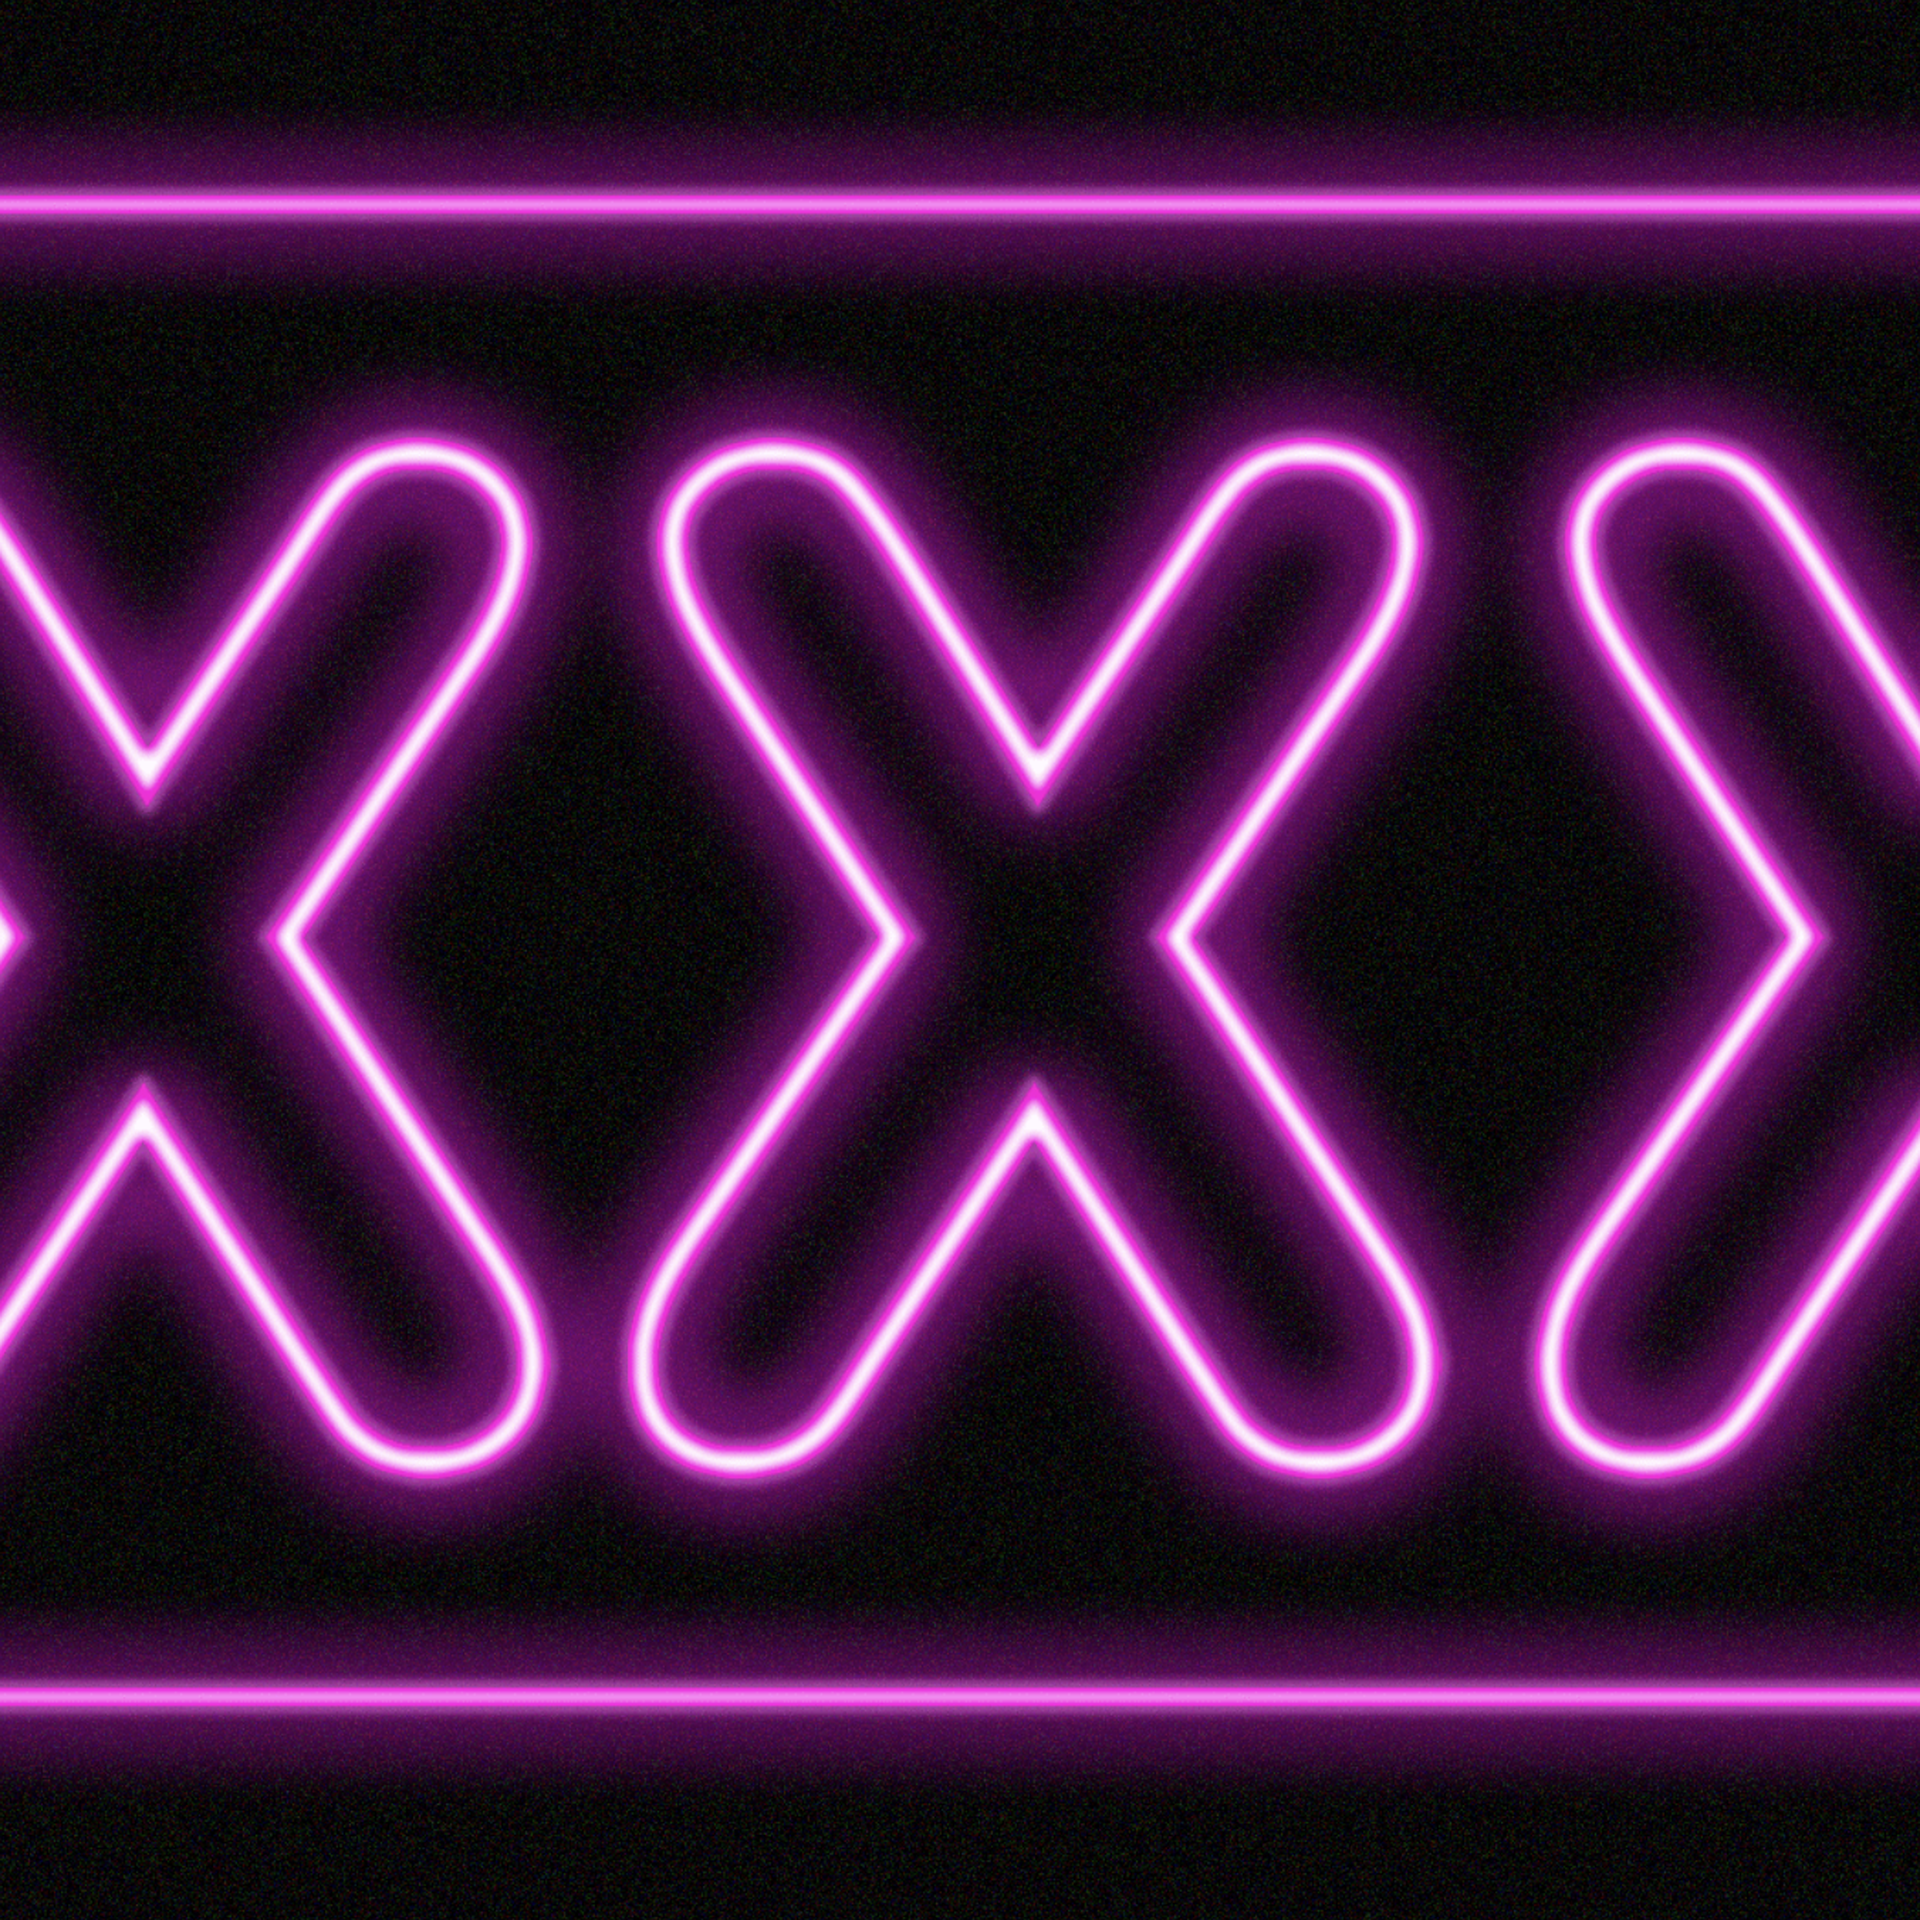 Www Xxx Balpepar - Porn industry group sues over Utah's age verification law